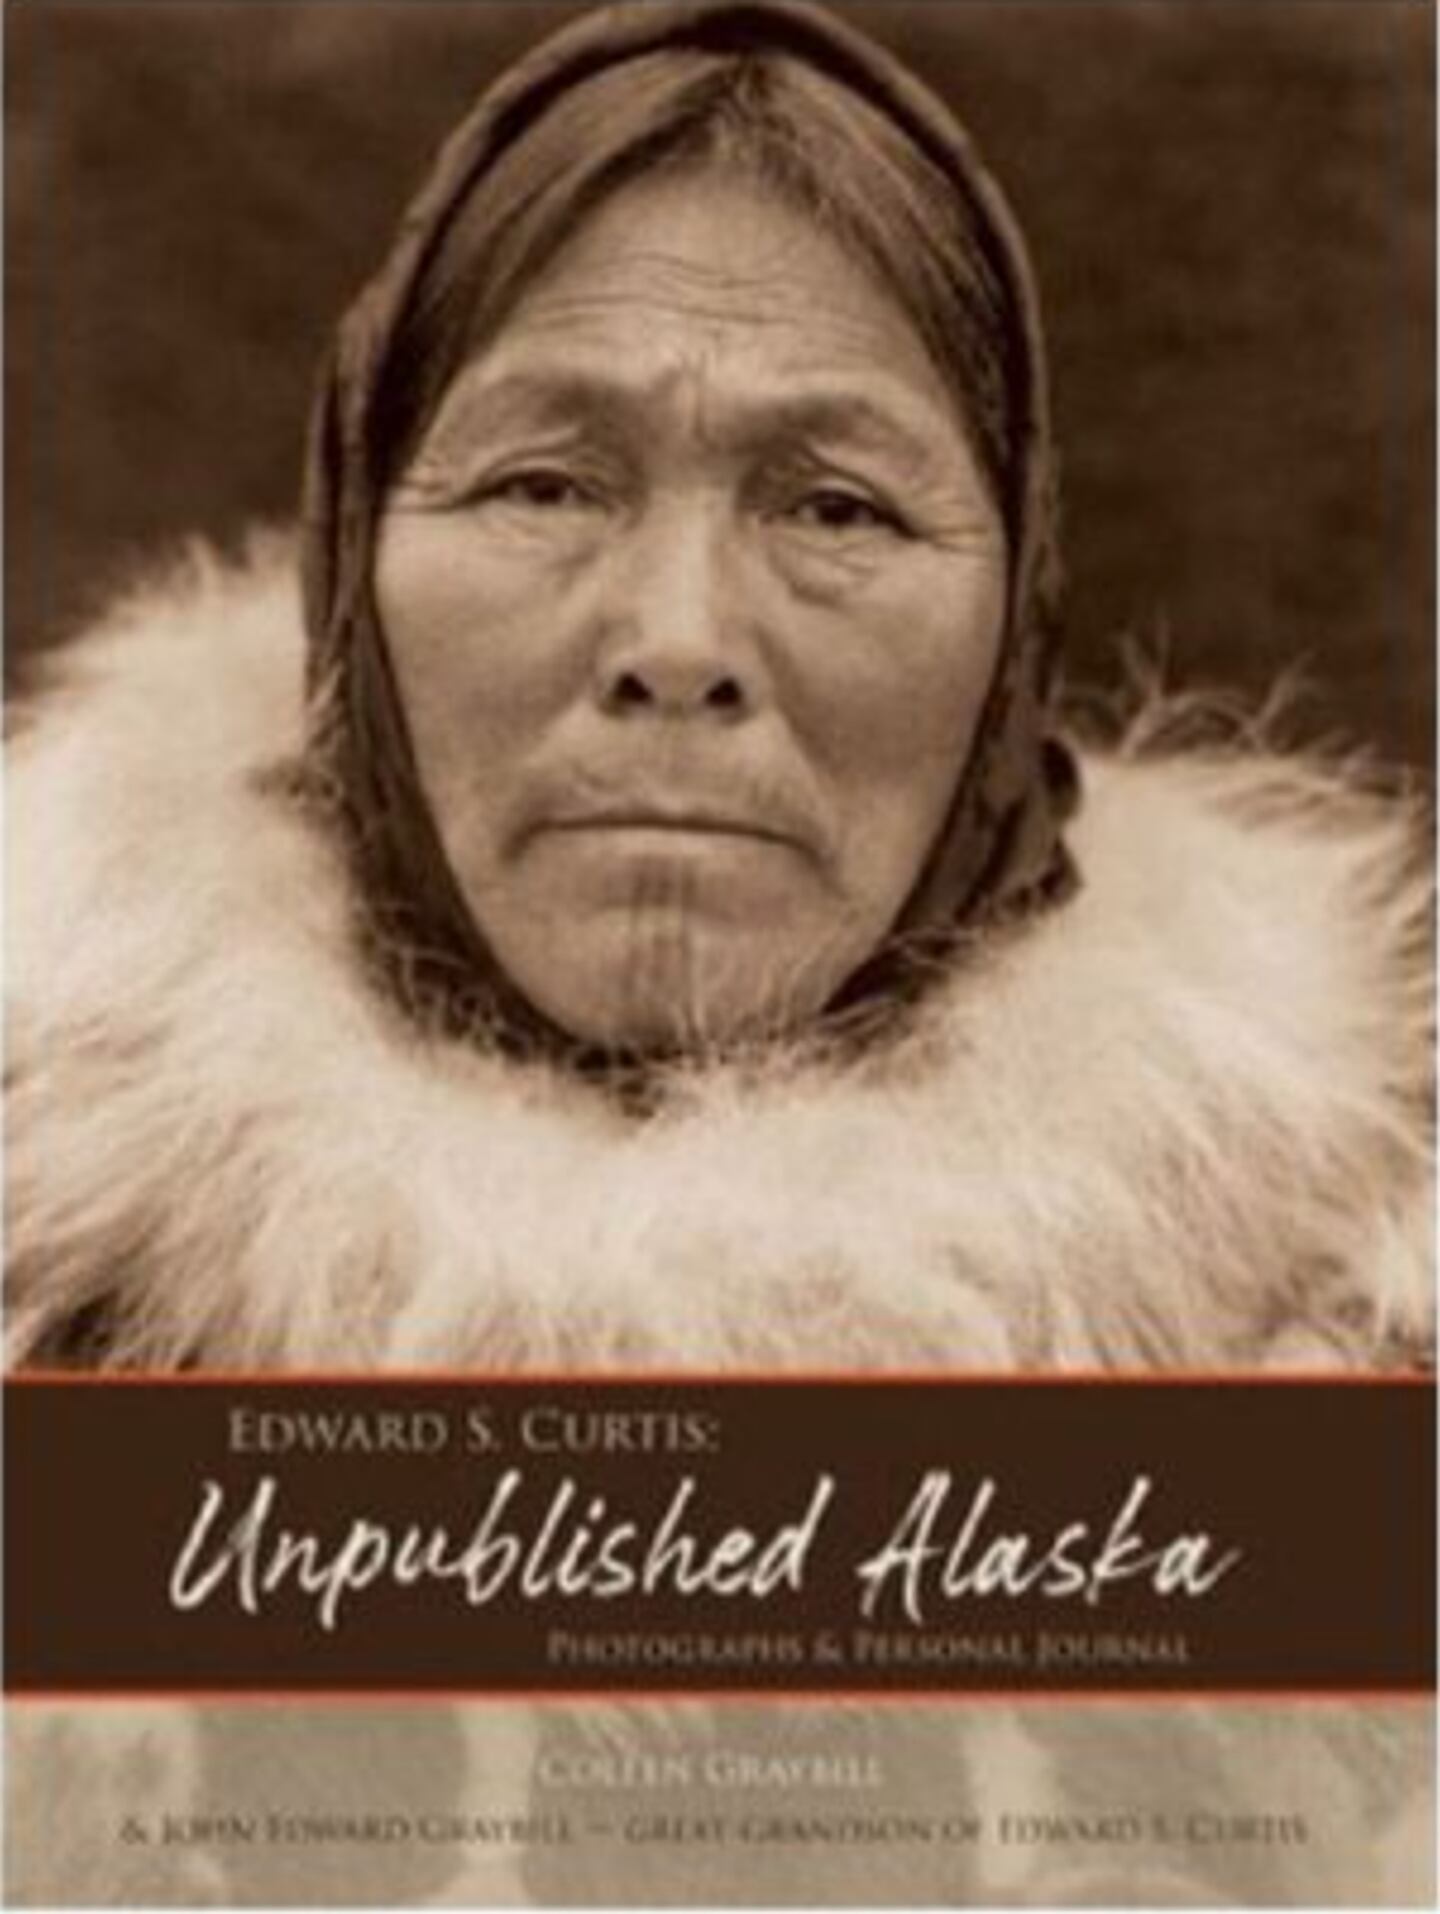 “Edward S. Curtis: Unpublished Alaska - Photographs & Personal Journal”